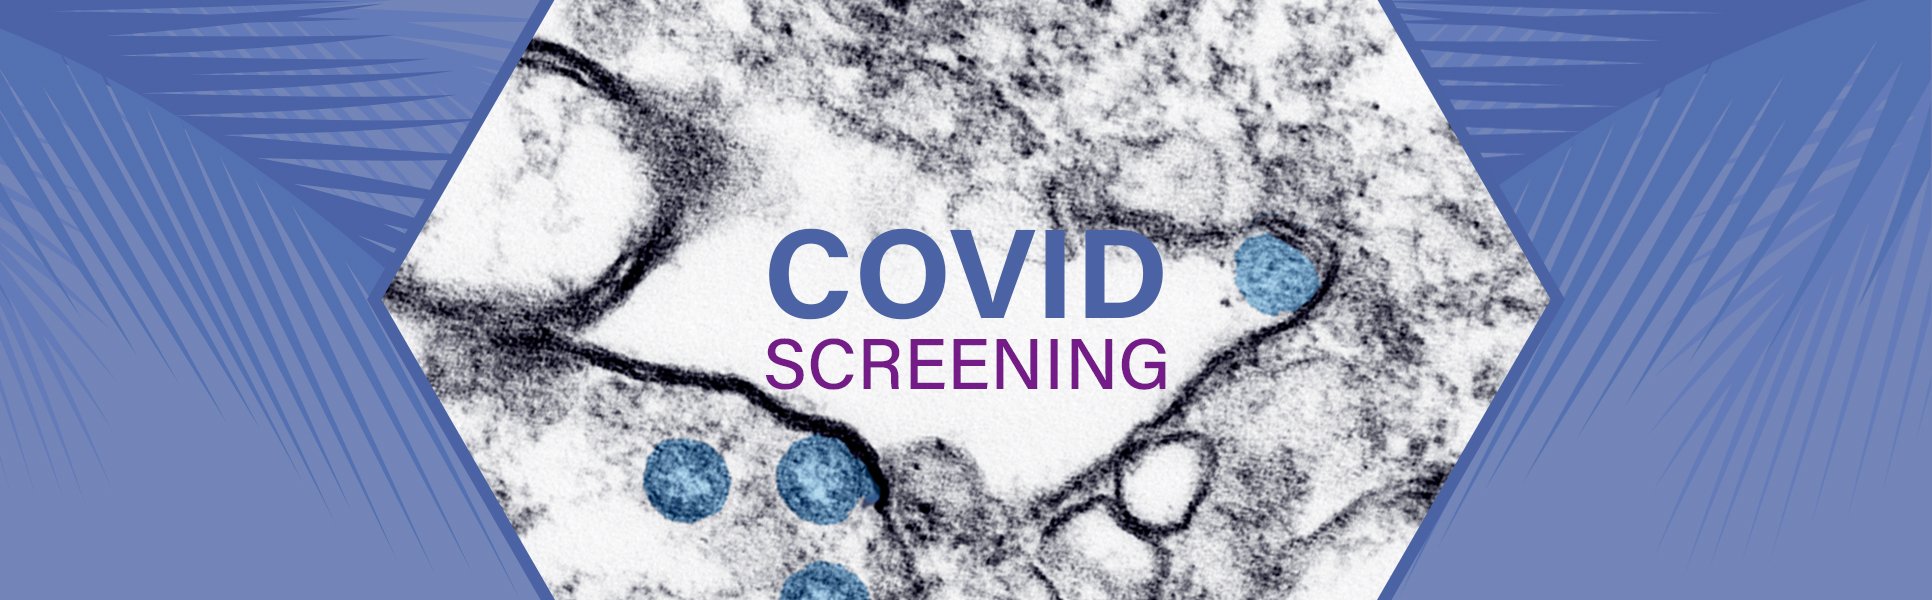 COVID-19 Screening | DOHC